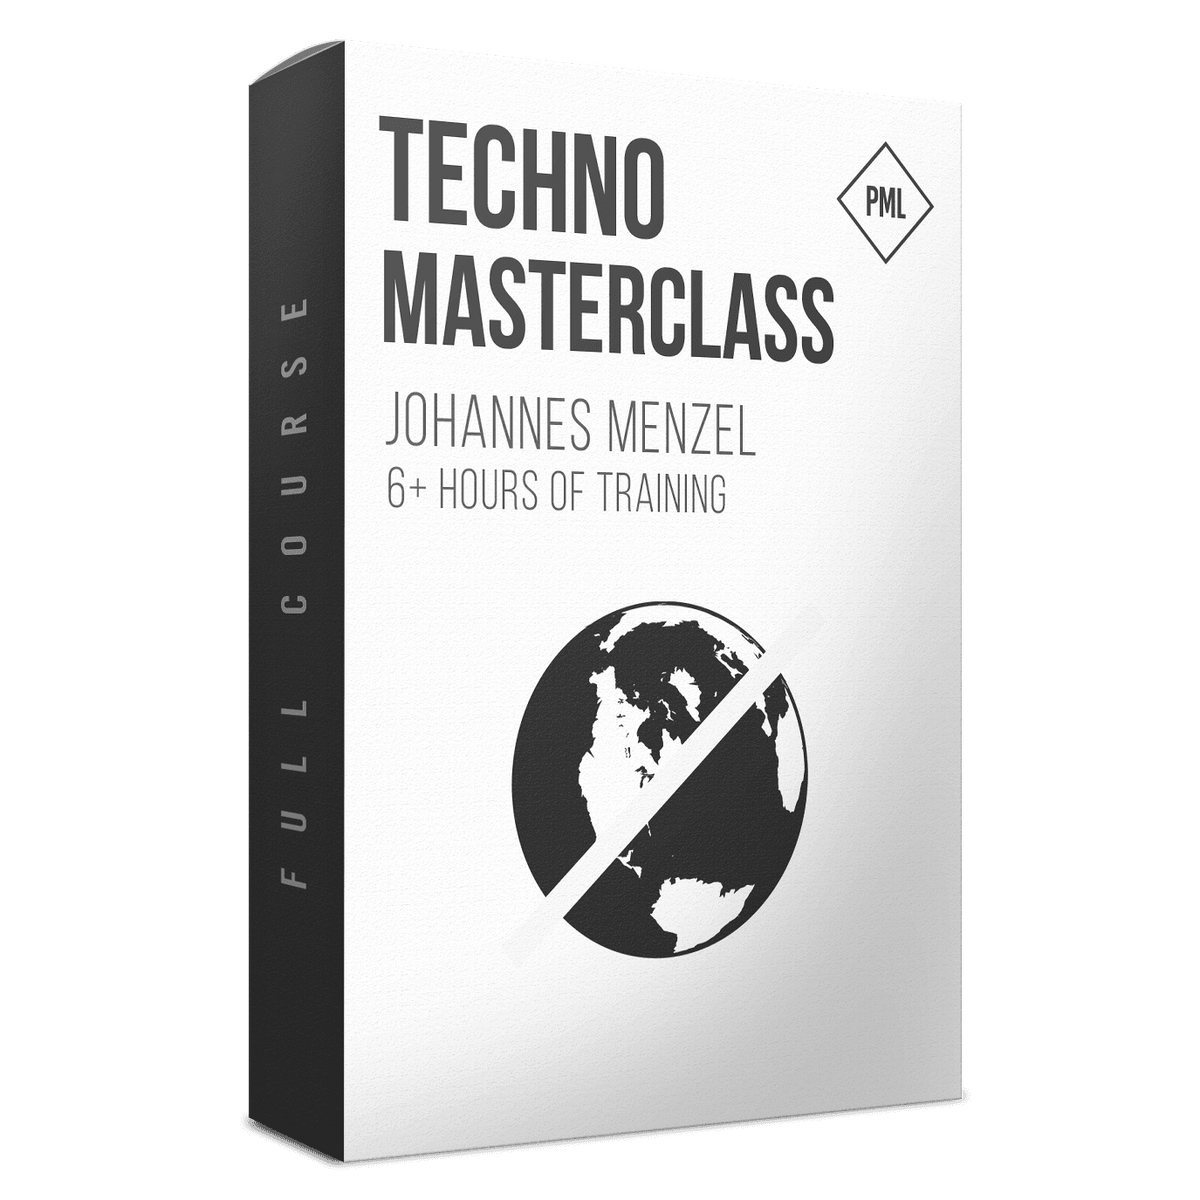 Techno Masterclass Product Box